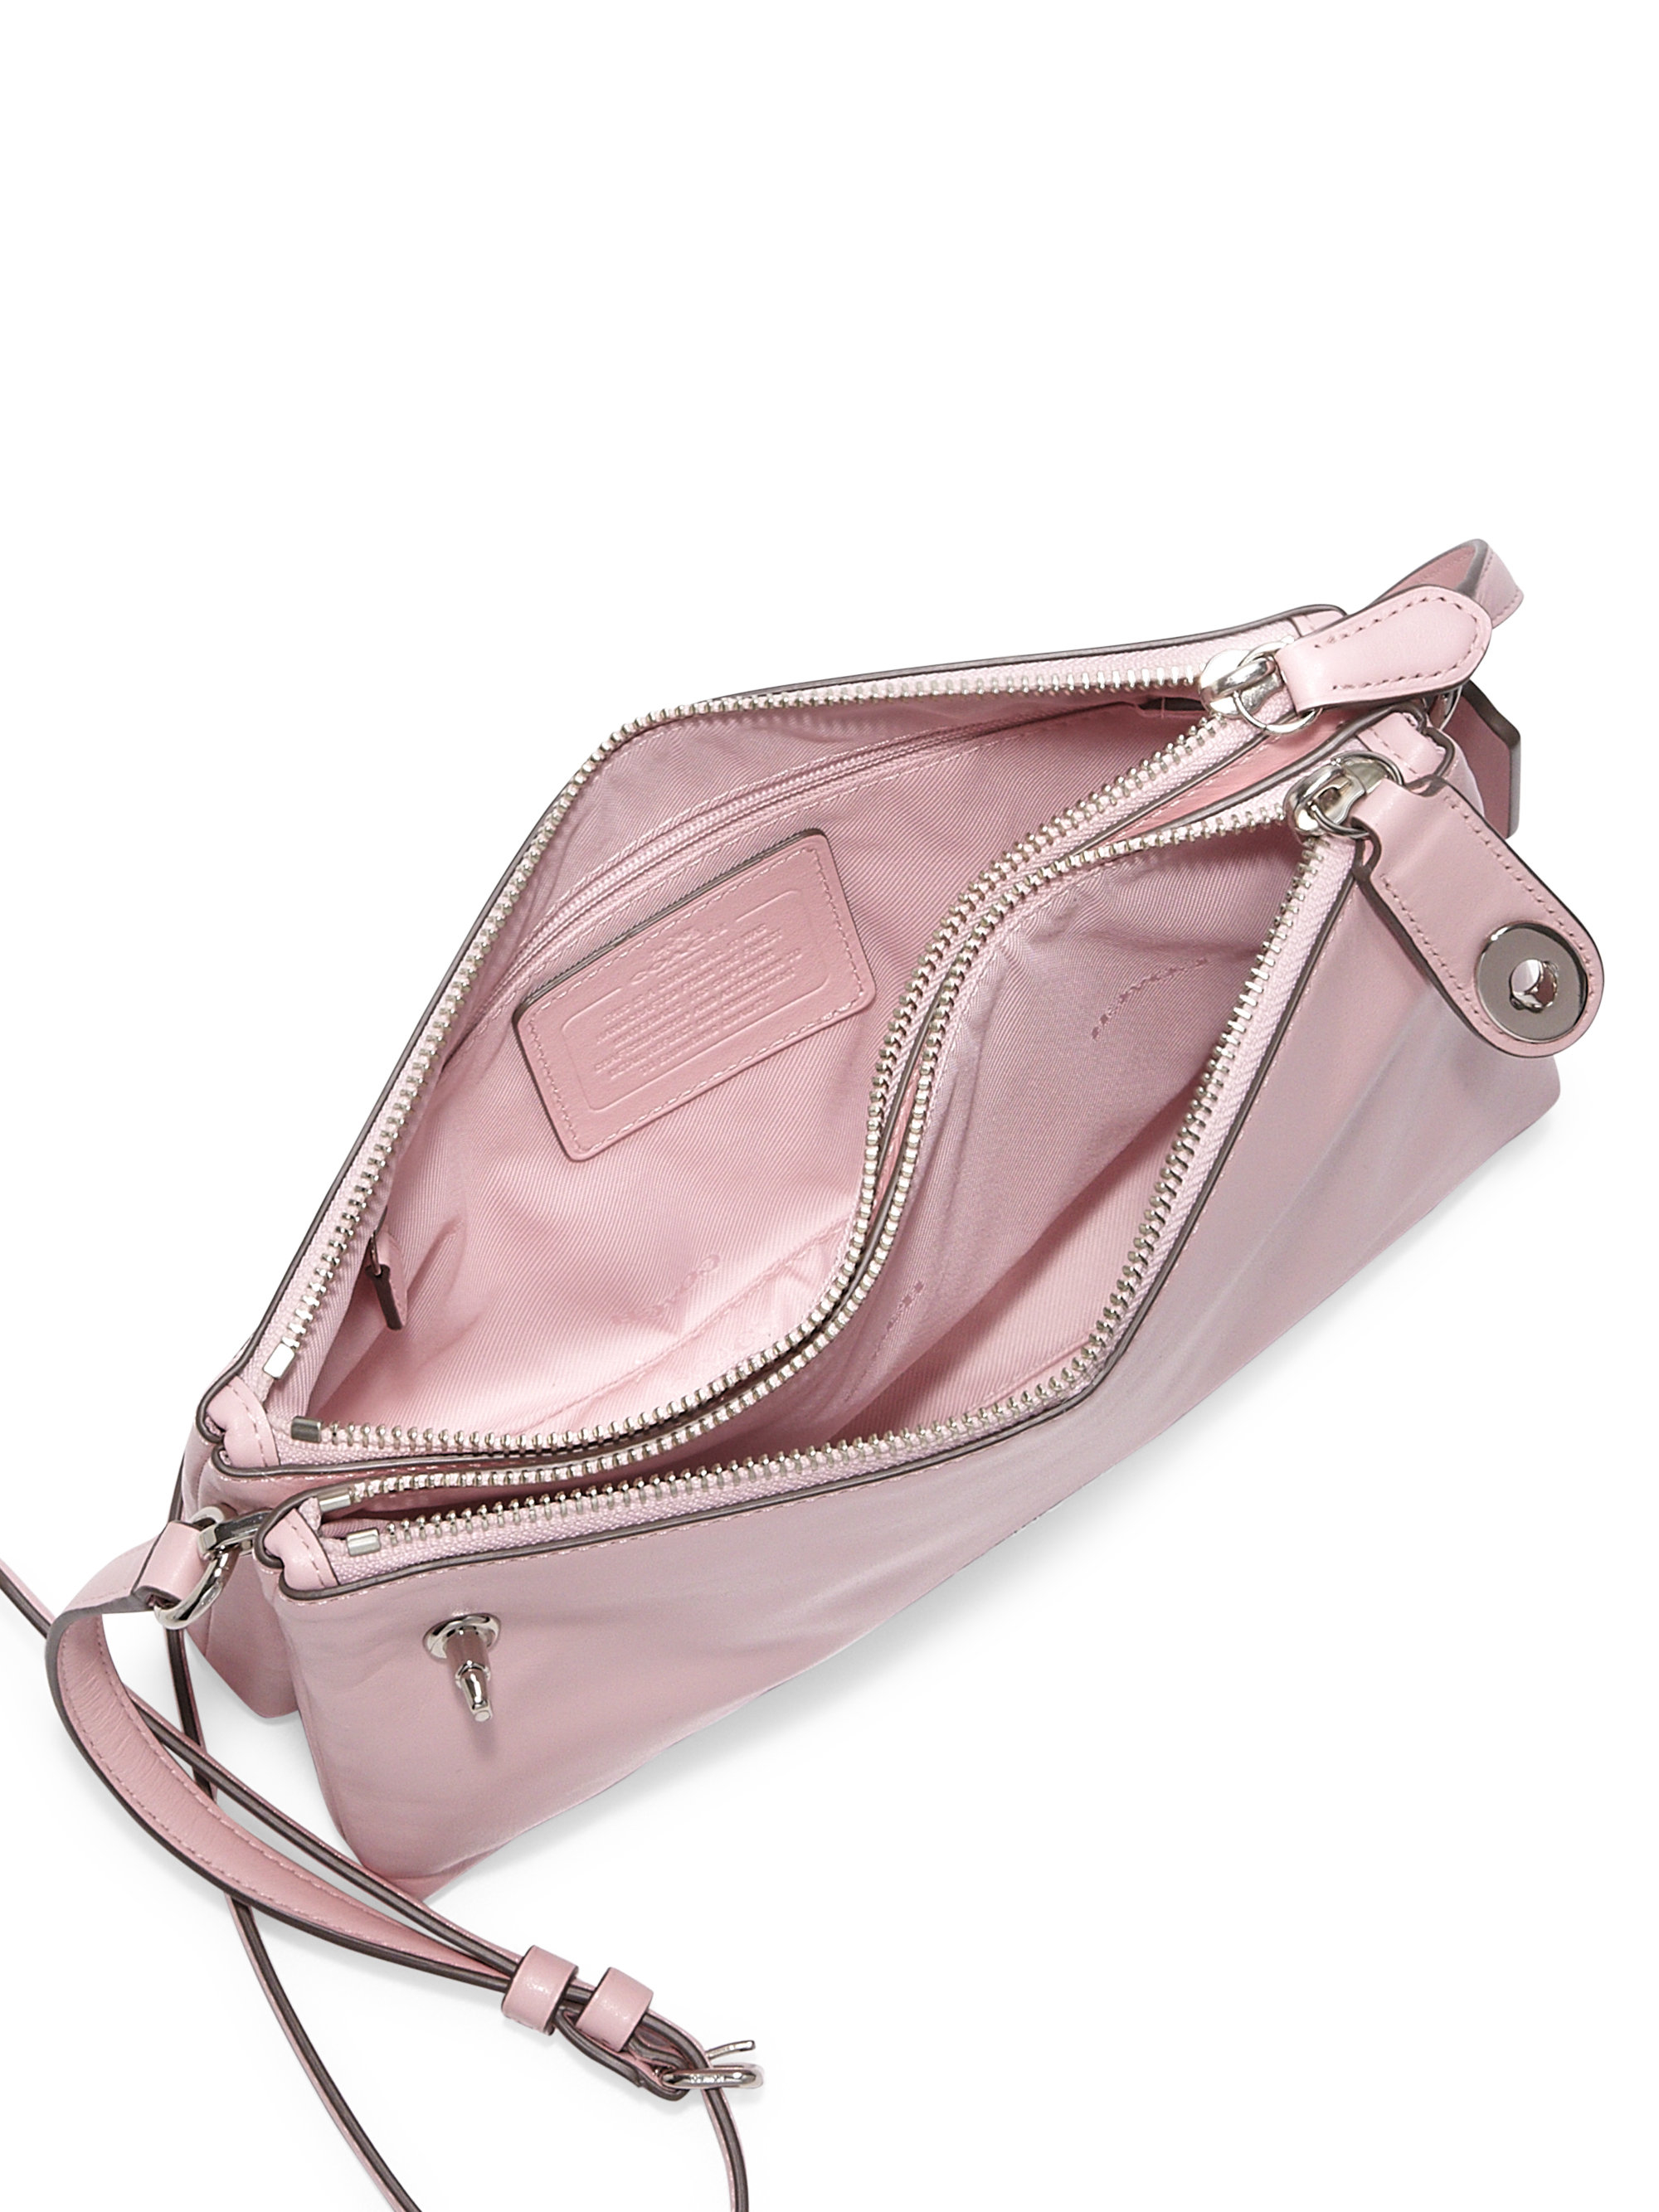 COACH Crosby Leather Crossbody Bag in Pink - Lyst